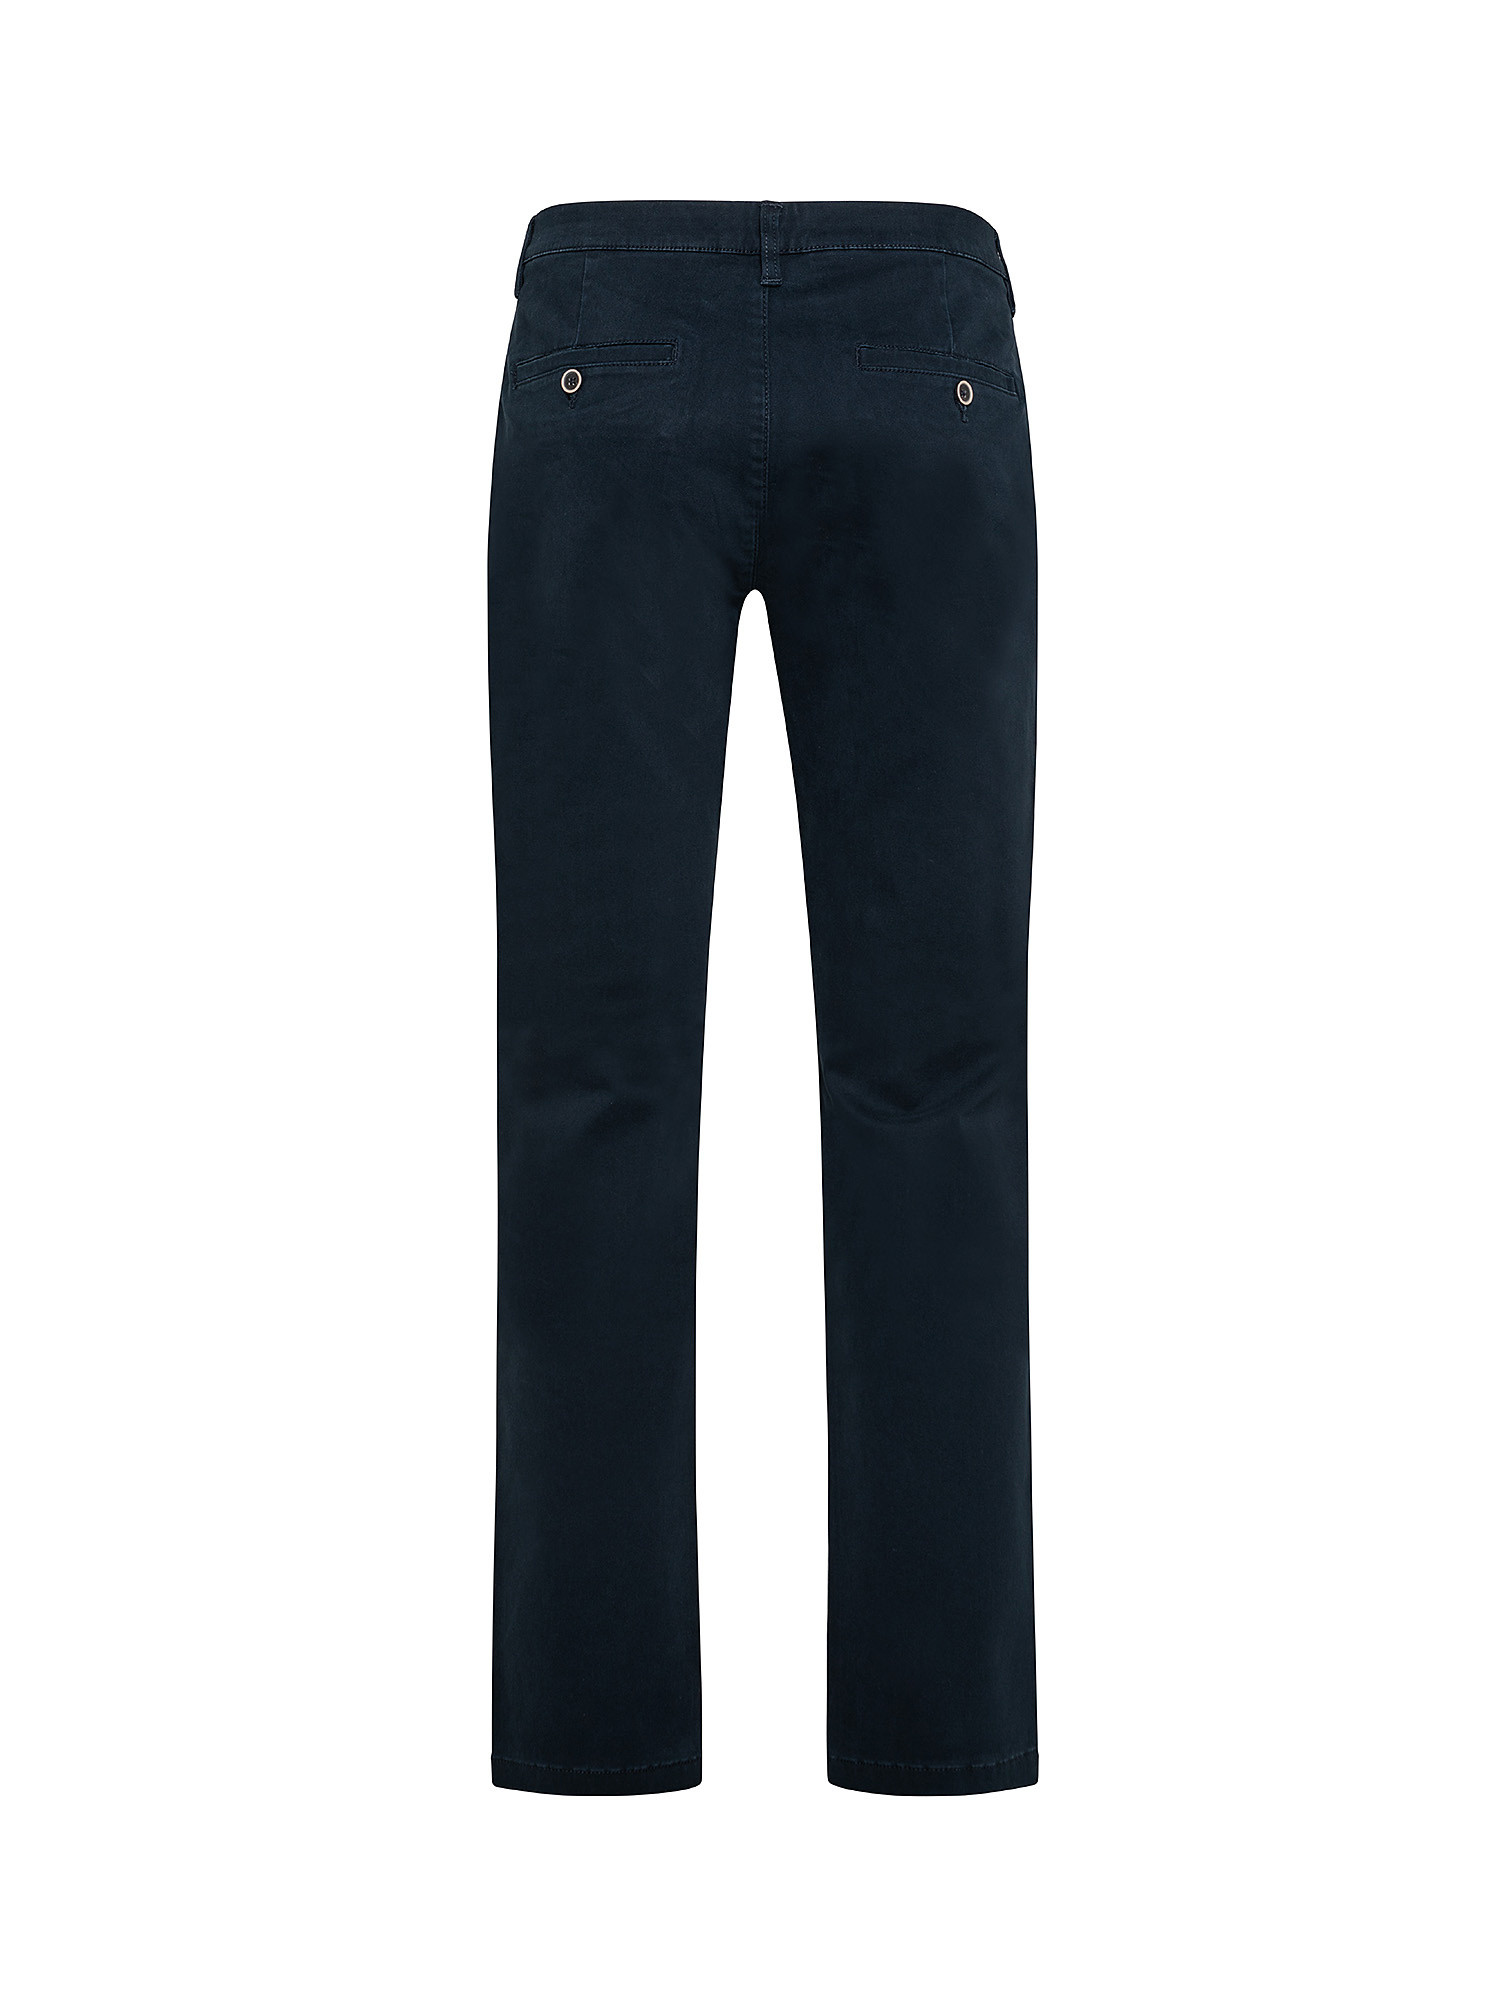 Pantalone slim comfort fit in cotone elasticizzato, Blu scuro, large image number 1